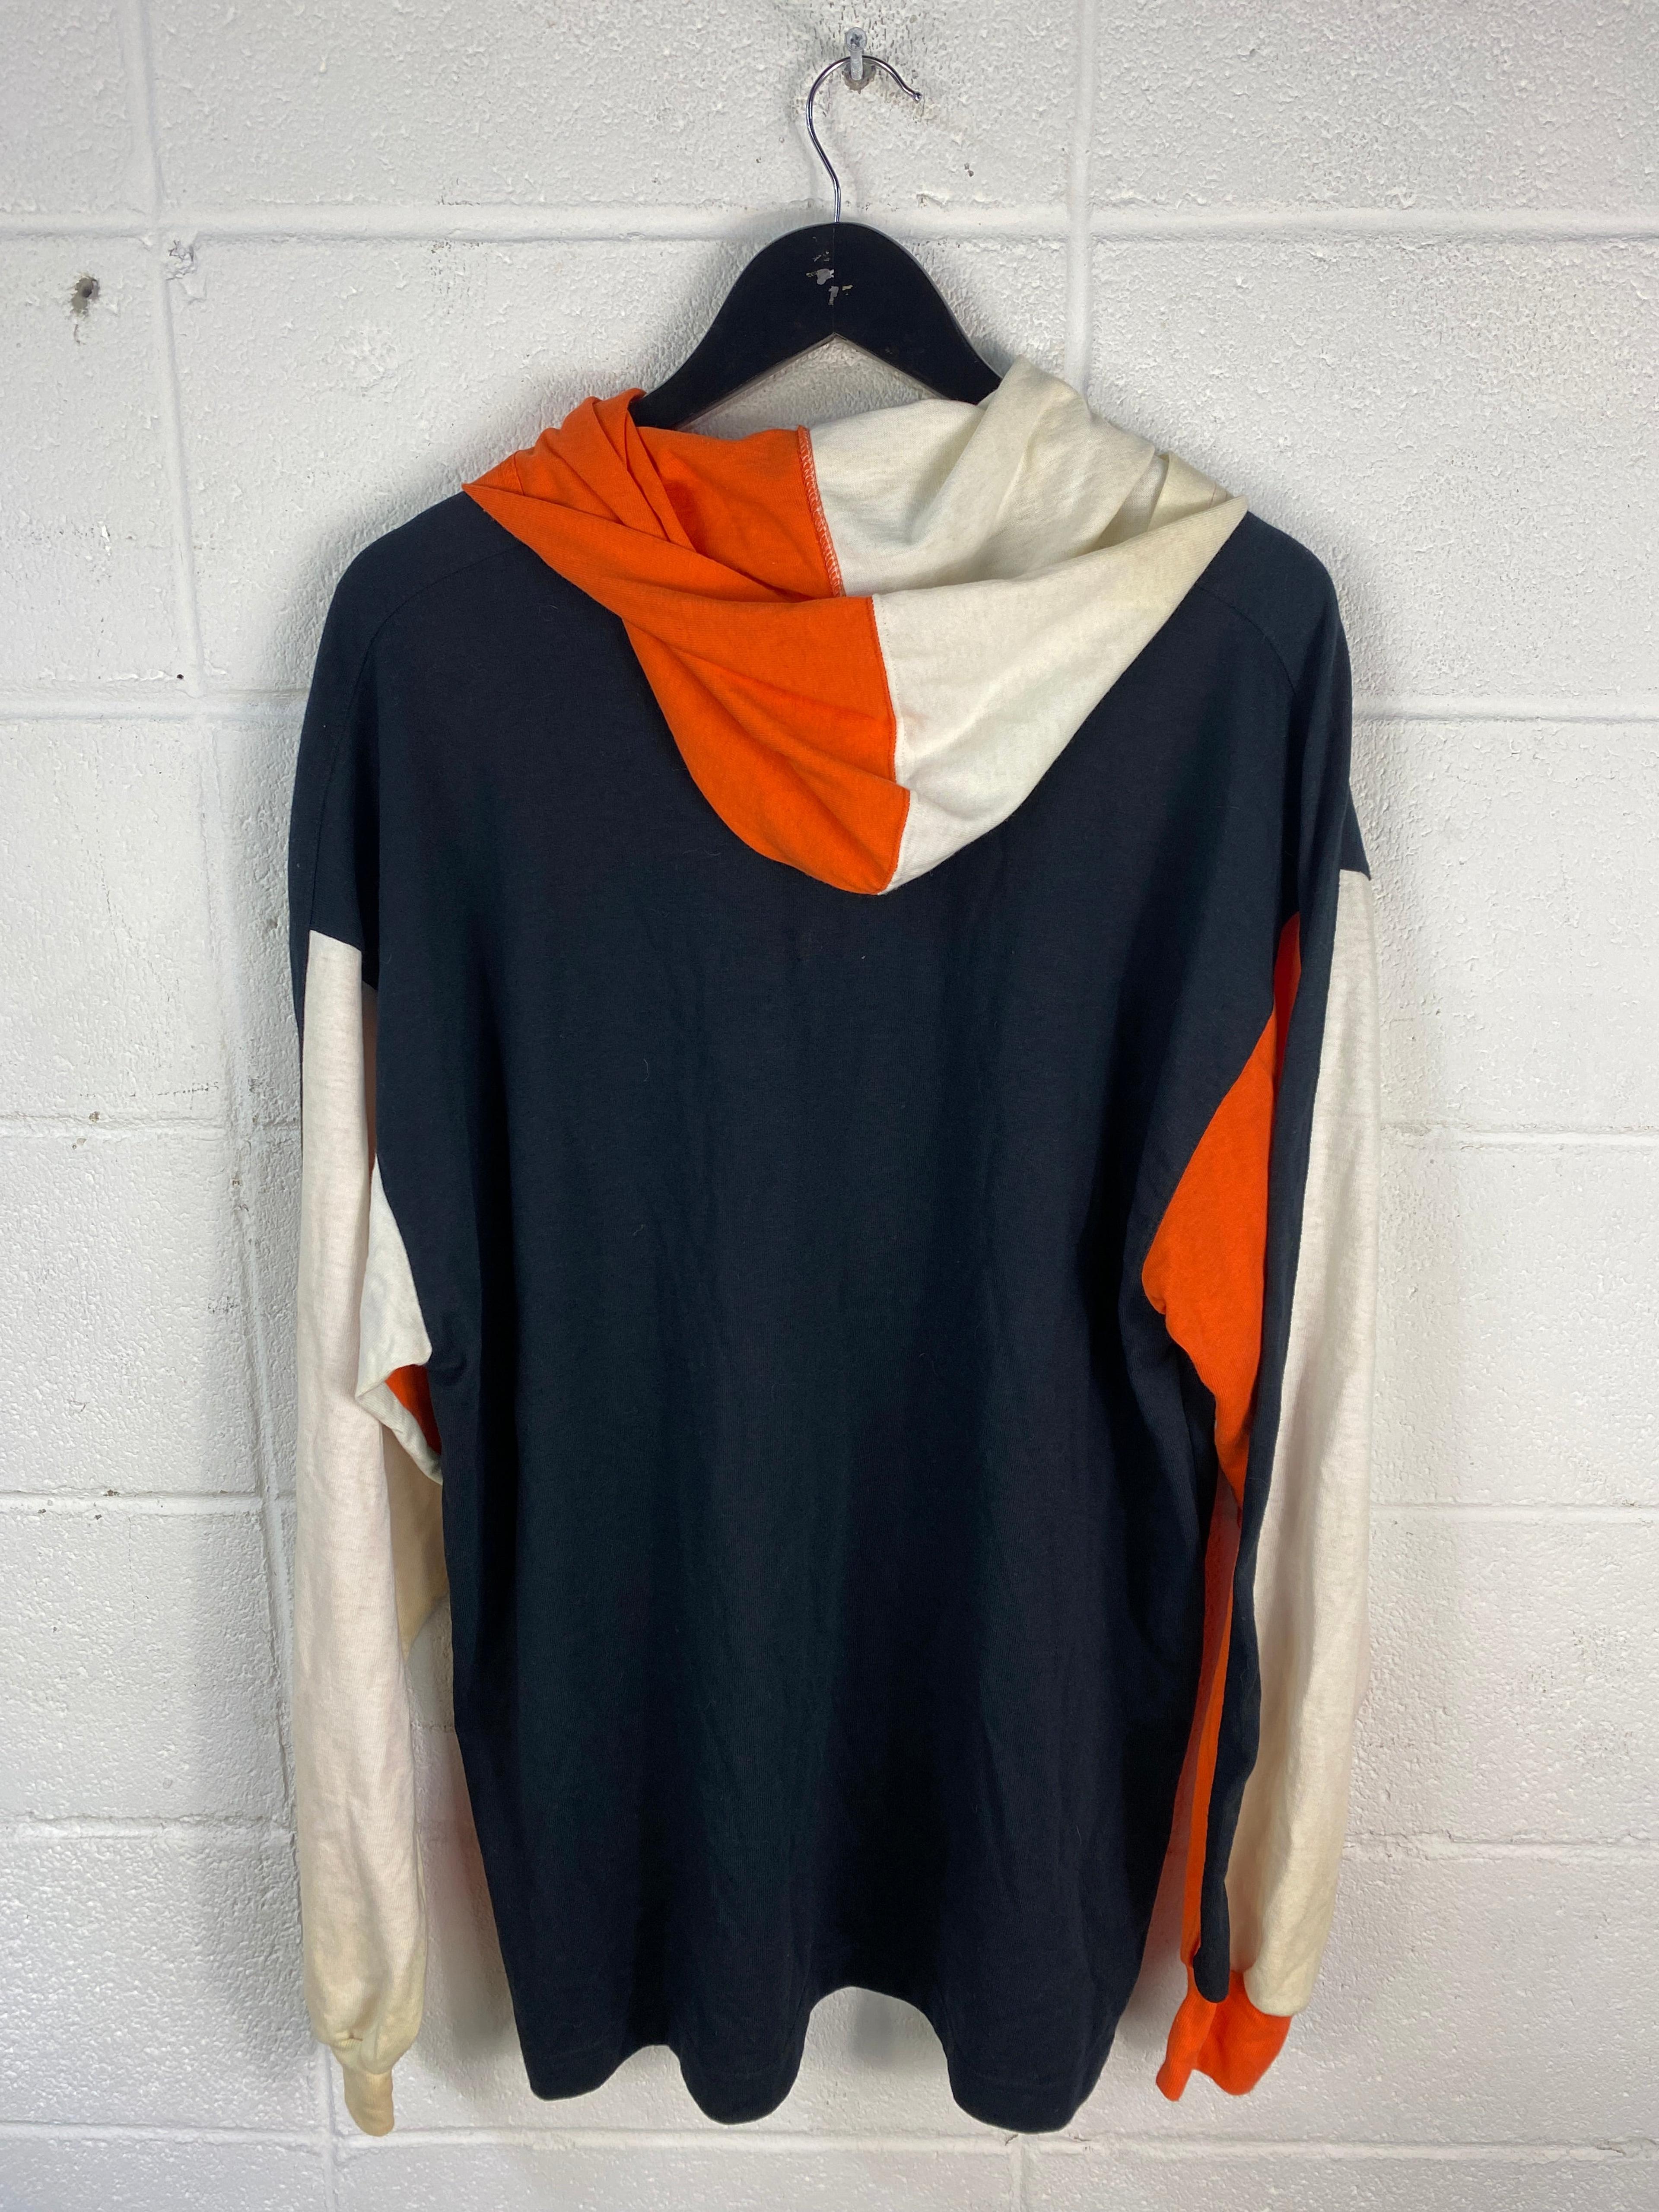 Color Block Sweatshirt Tennessee - Orange